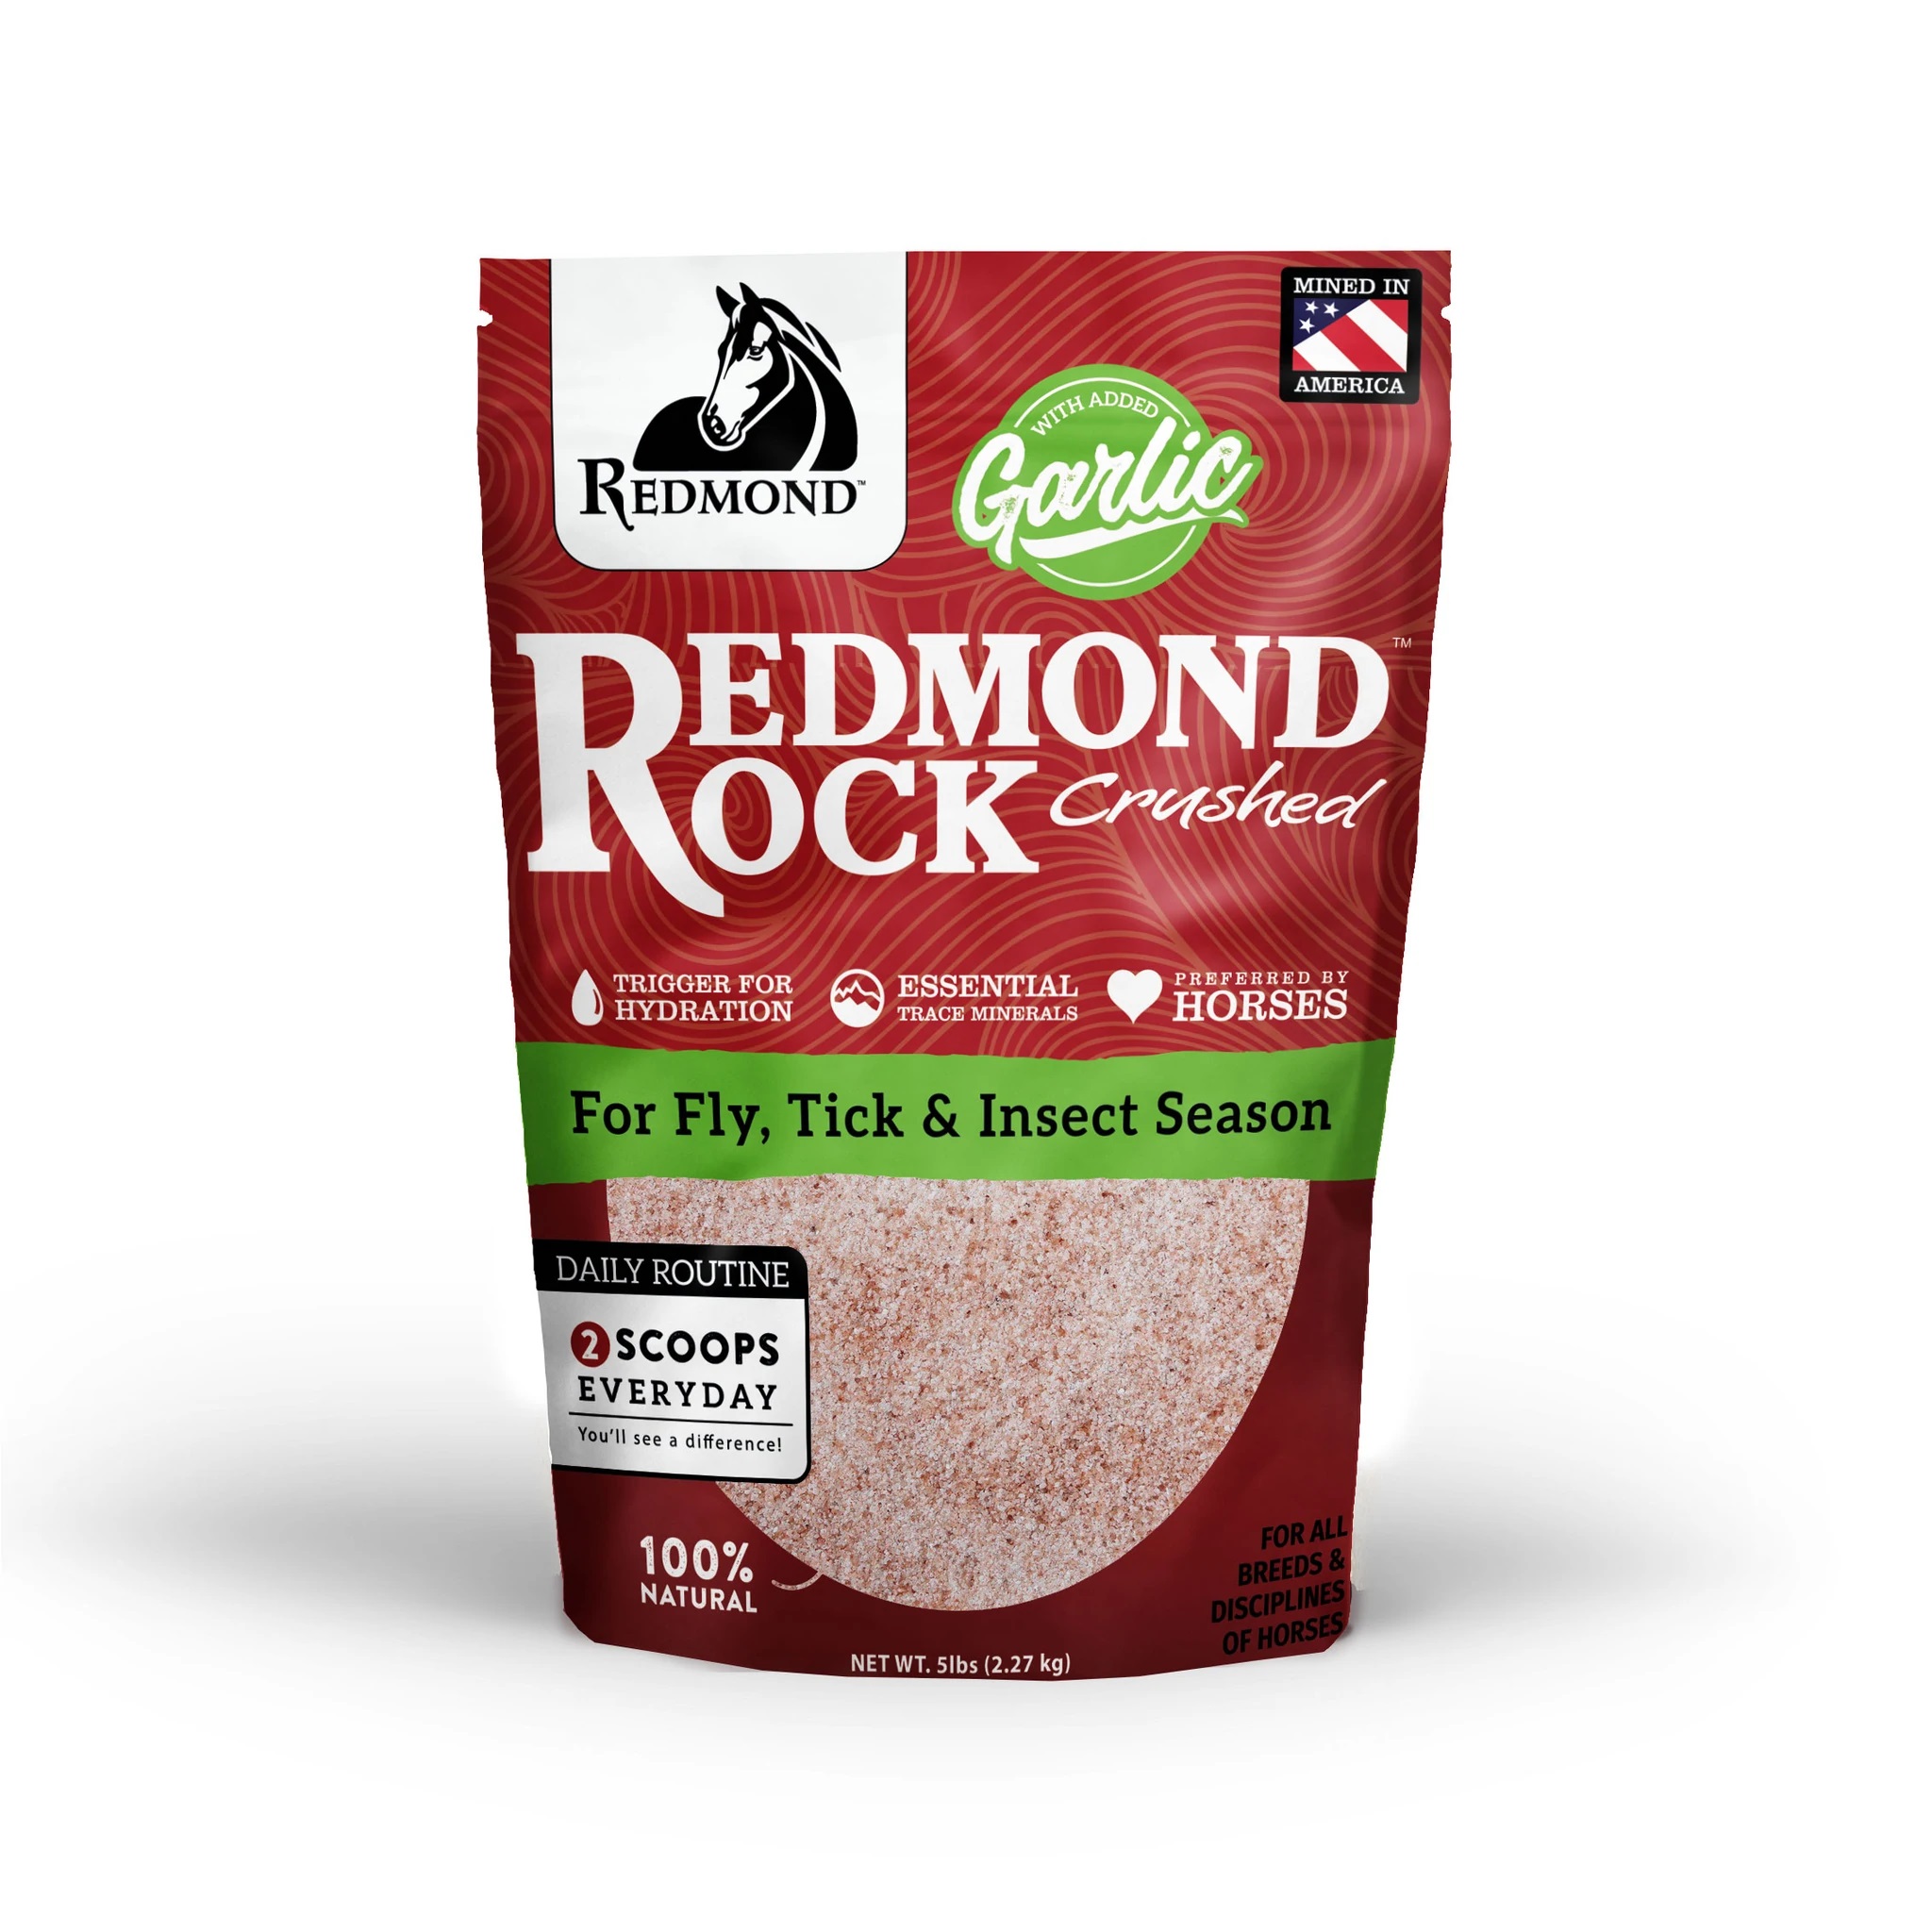 Redmond Rock Crushed with Garlic, 5 lb.